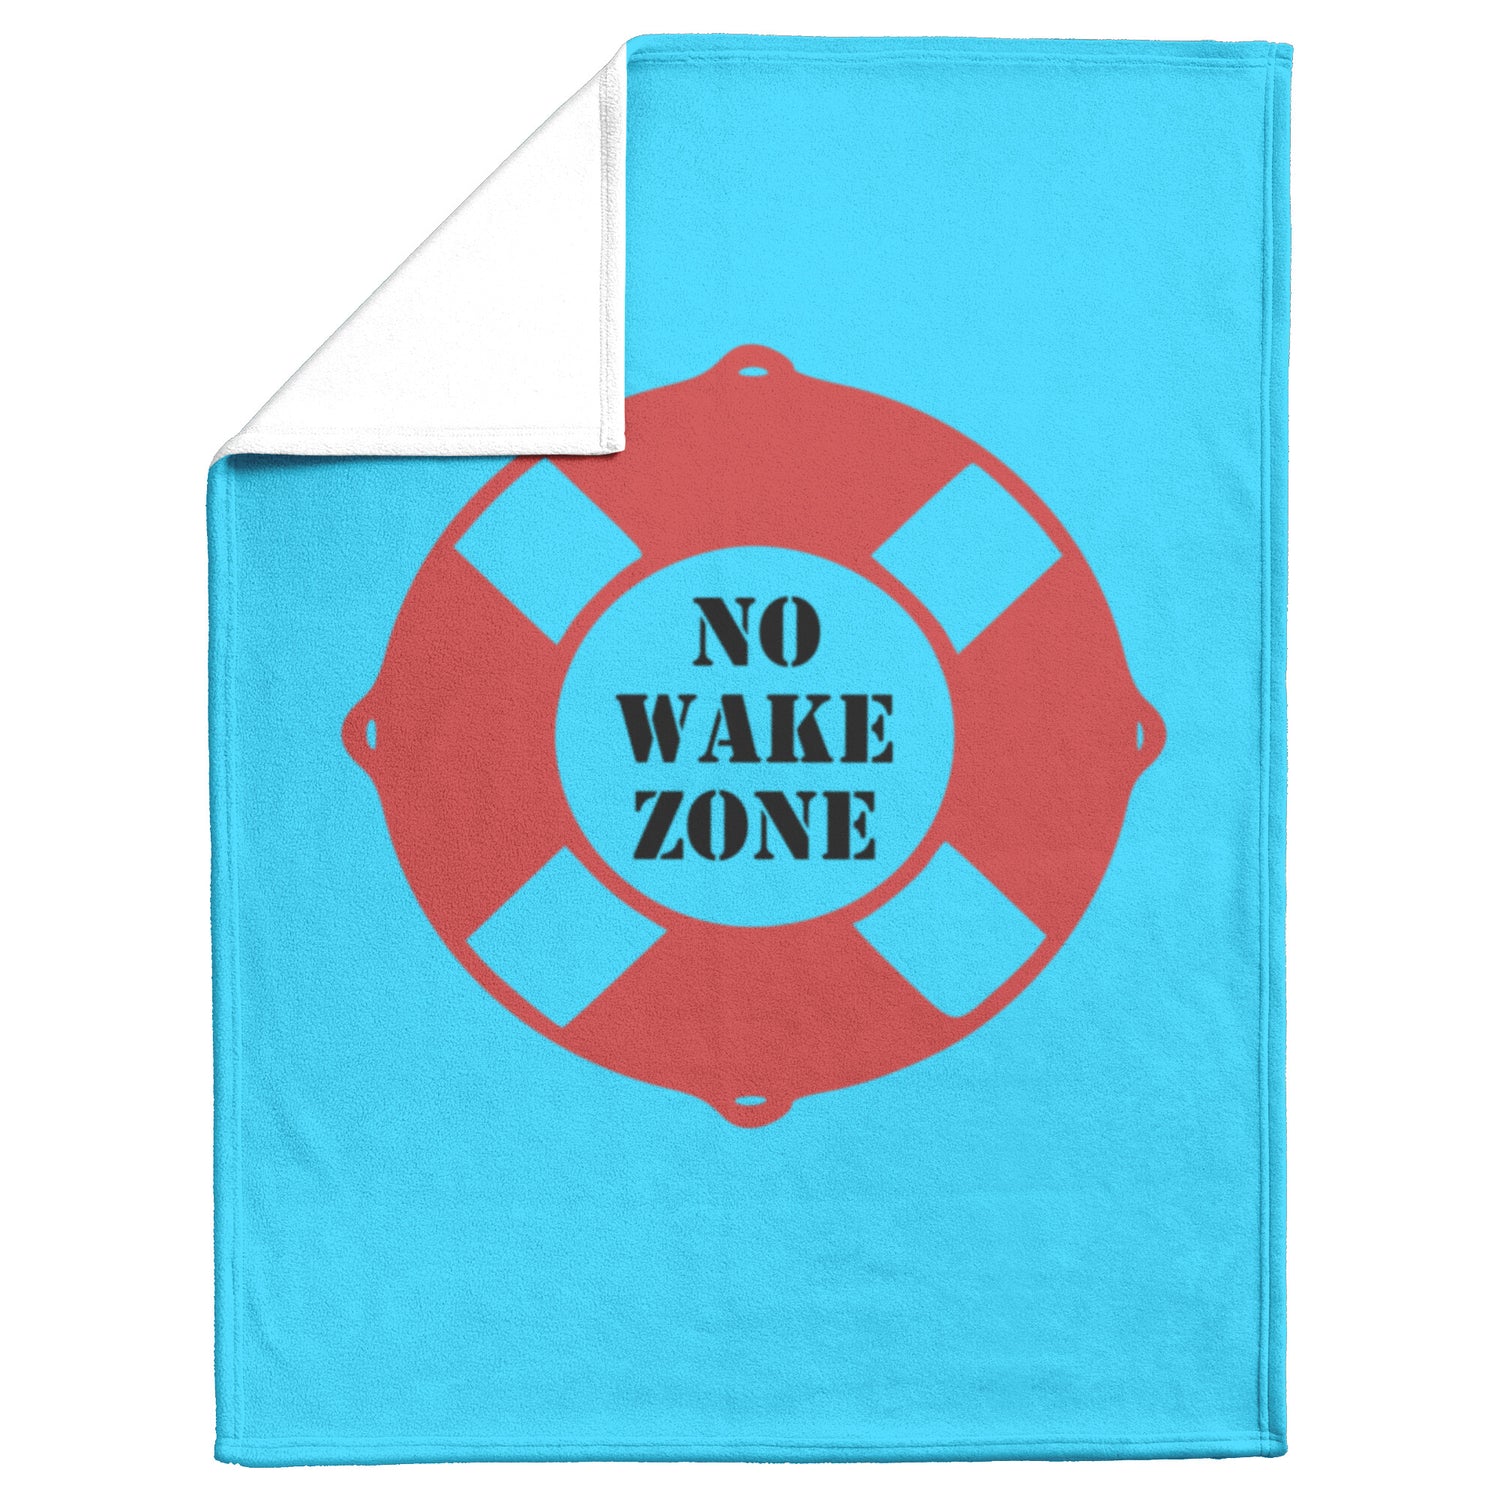 No wake zone blanket